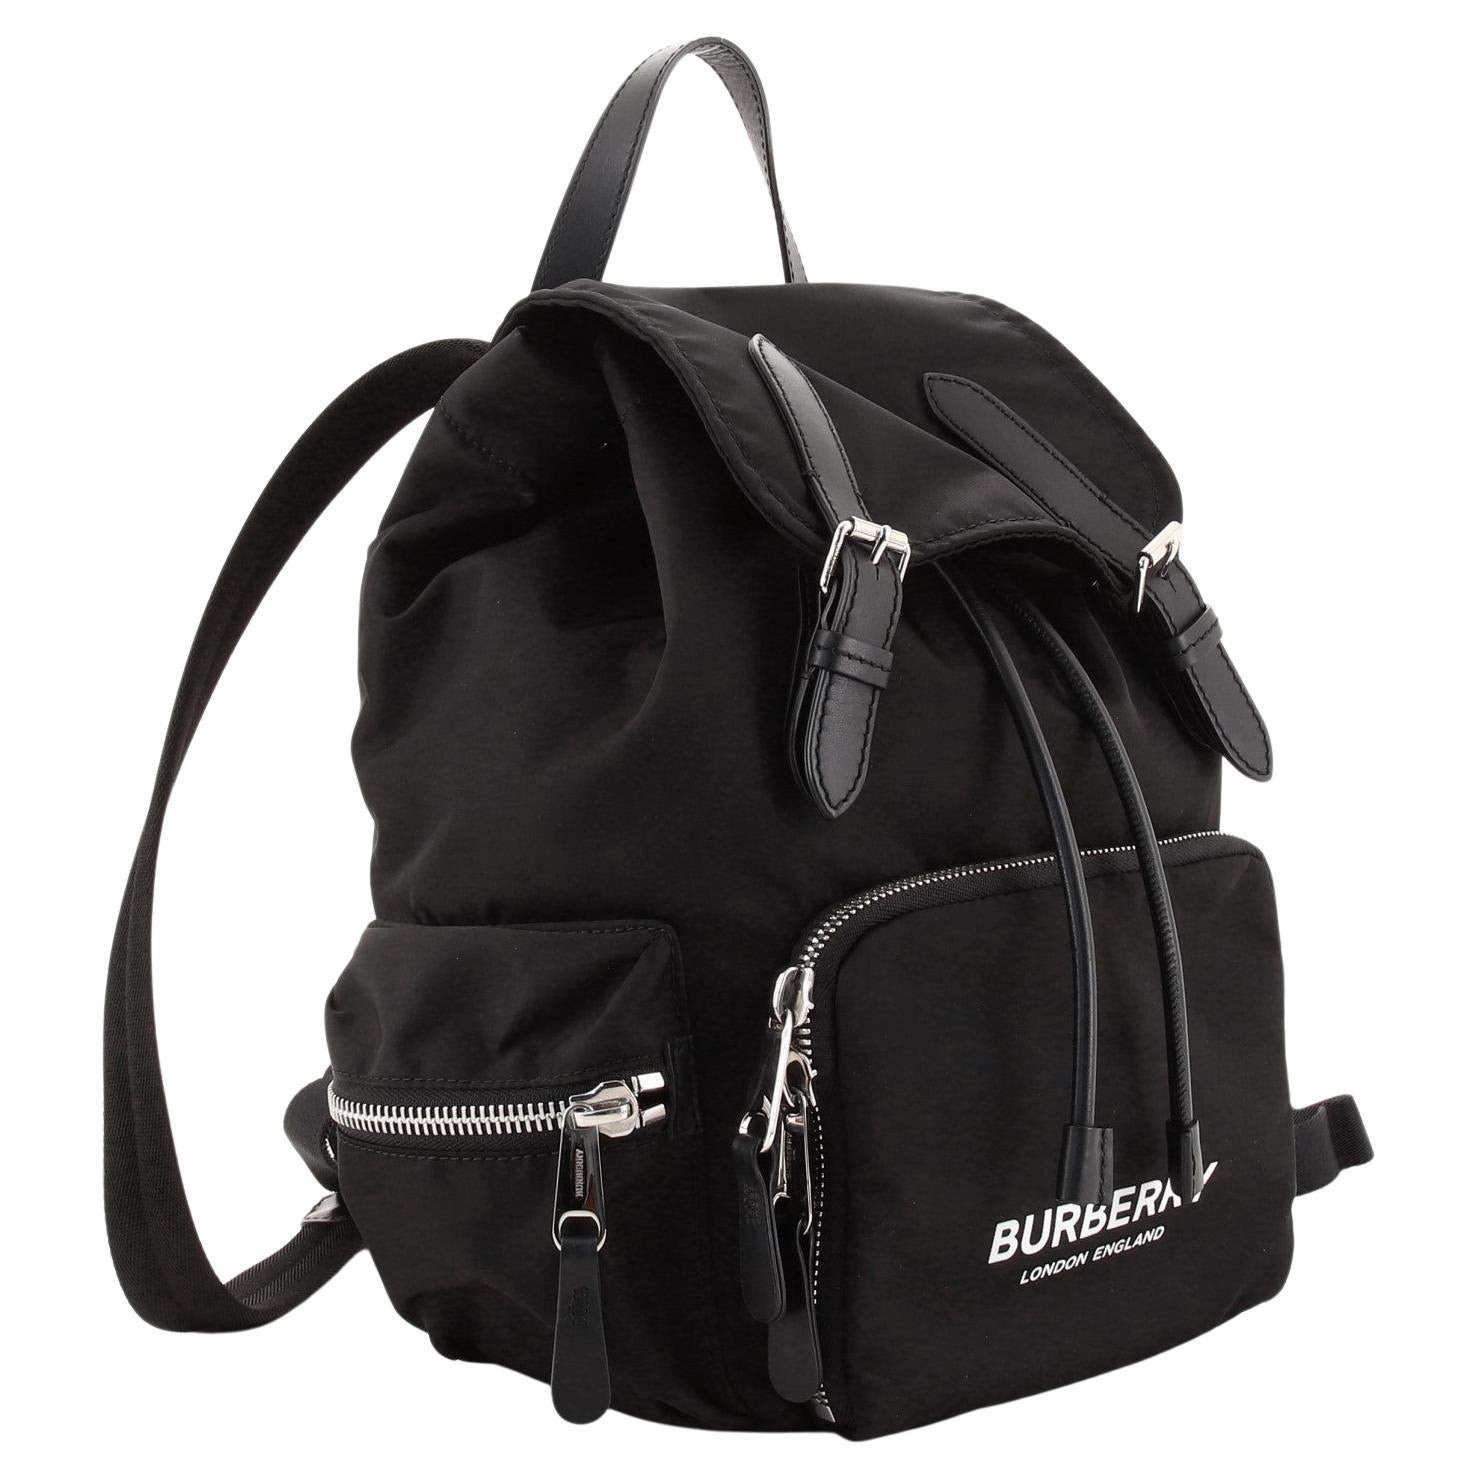 Burberry Black Nylon Leather Medium Rucksack Backpack